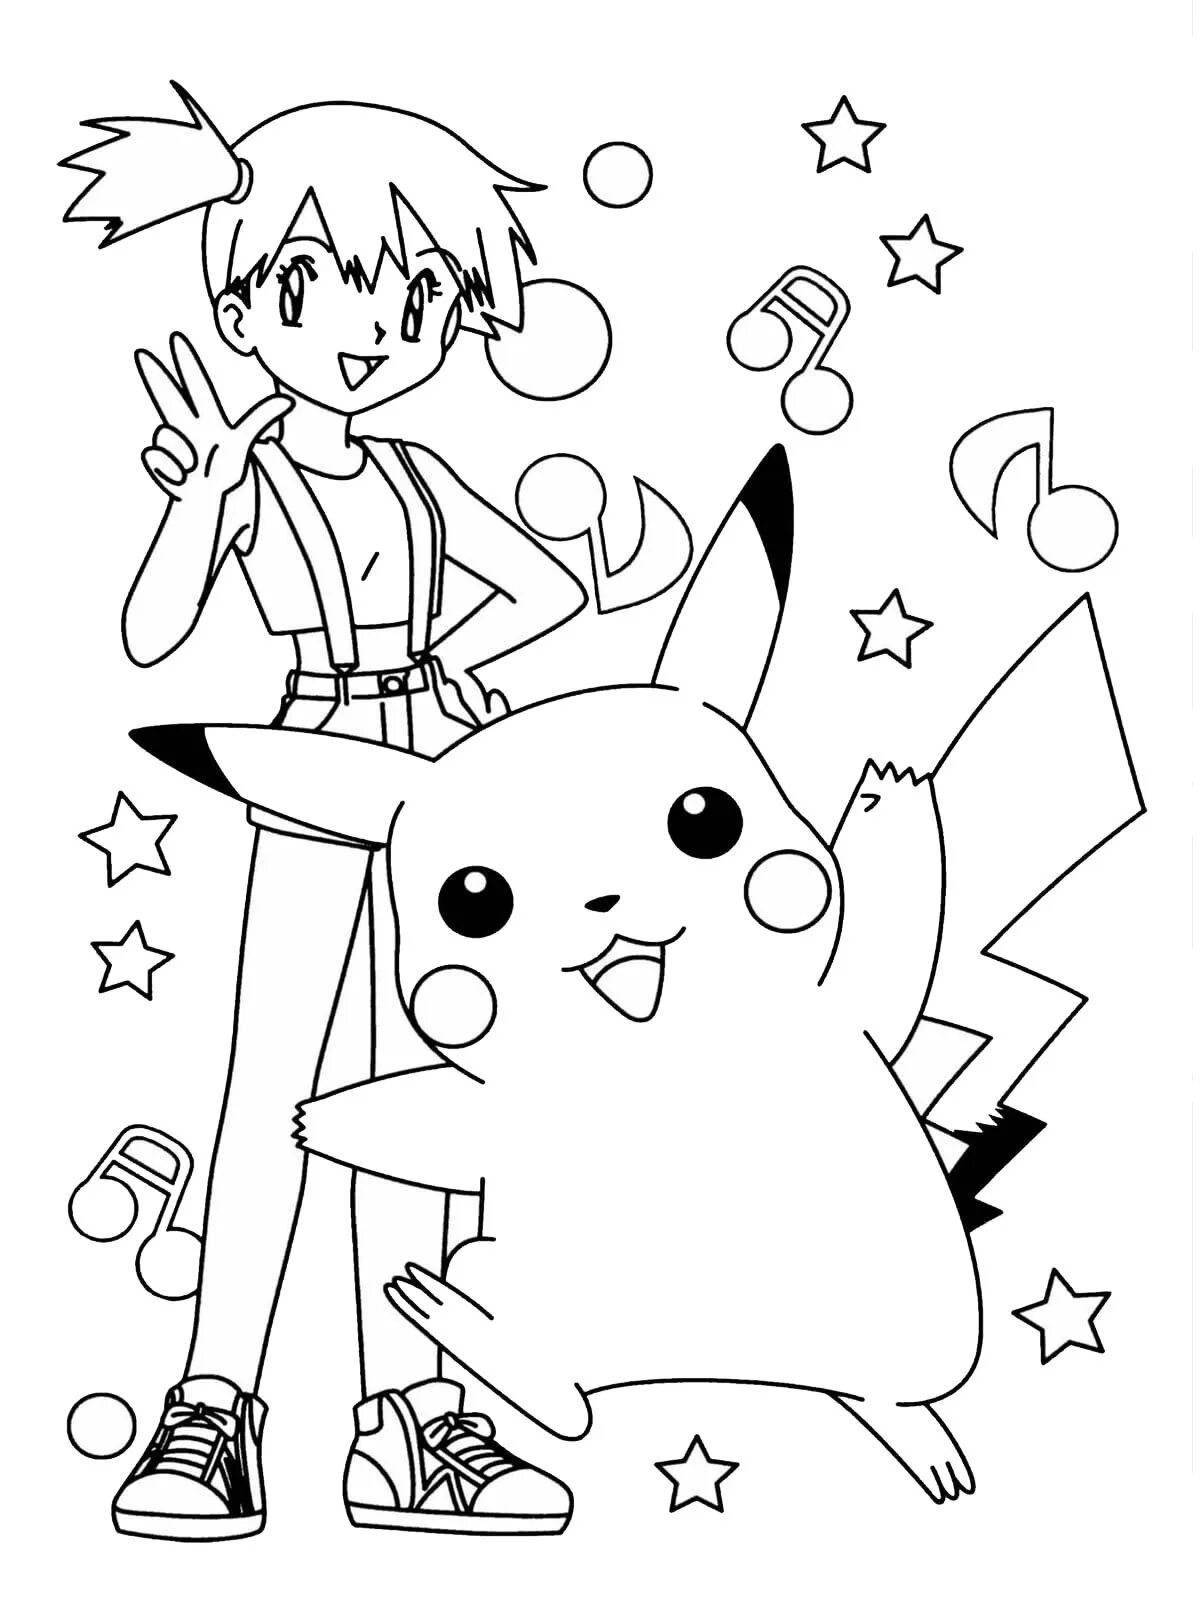 Pikachu fun coloring for boys